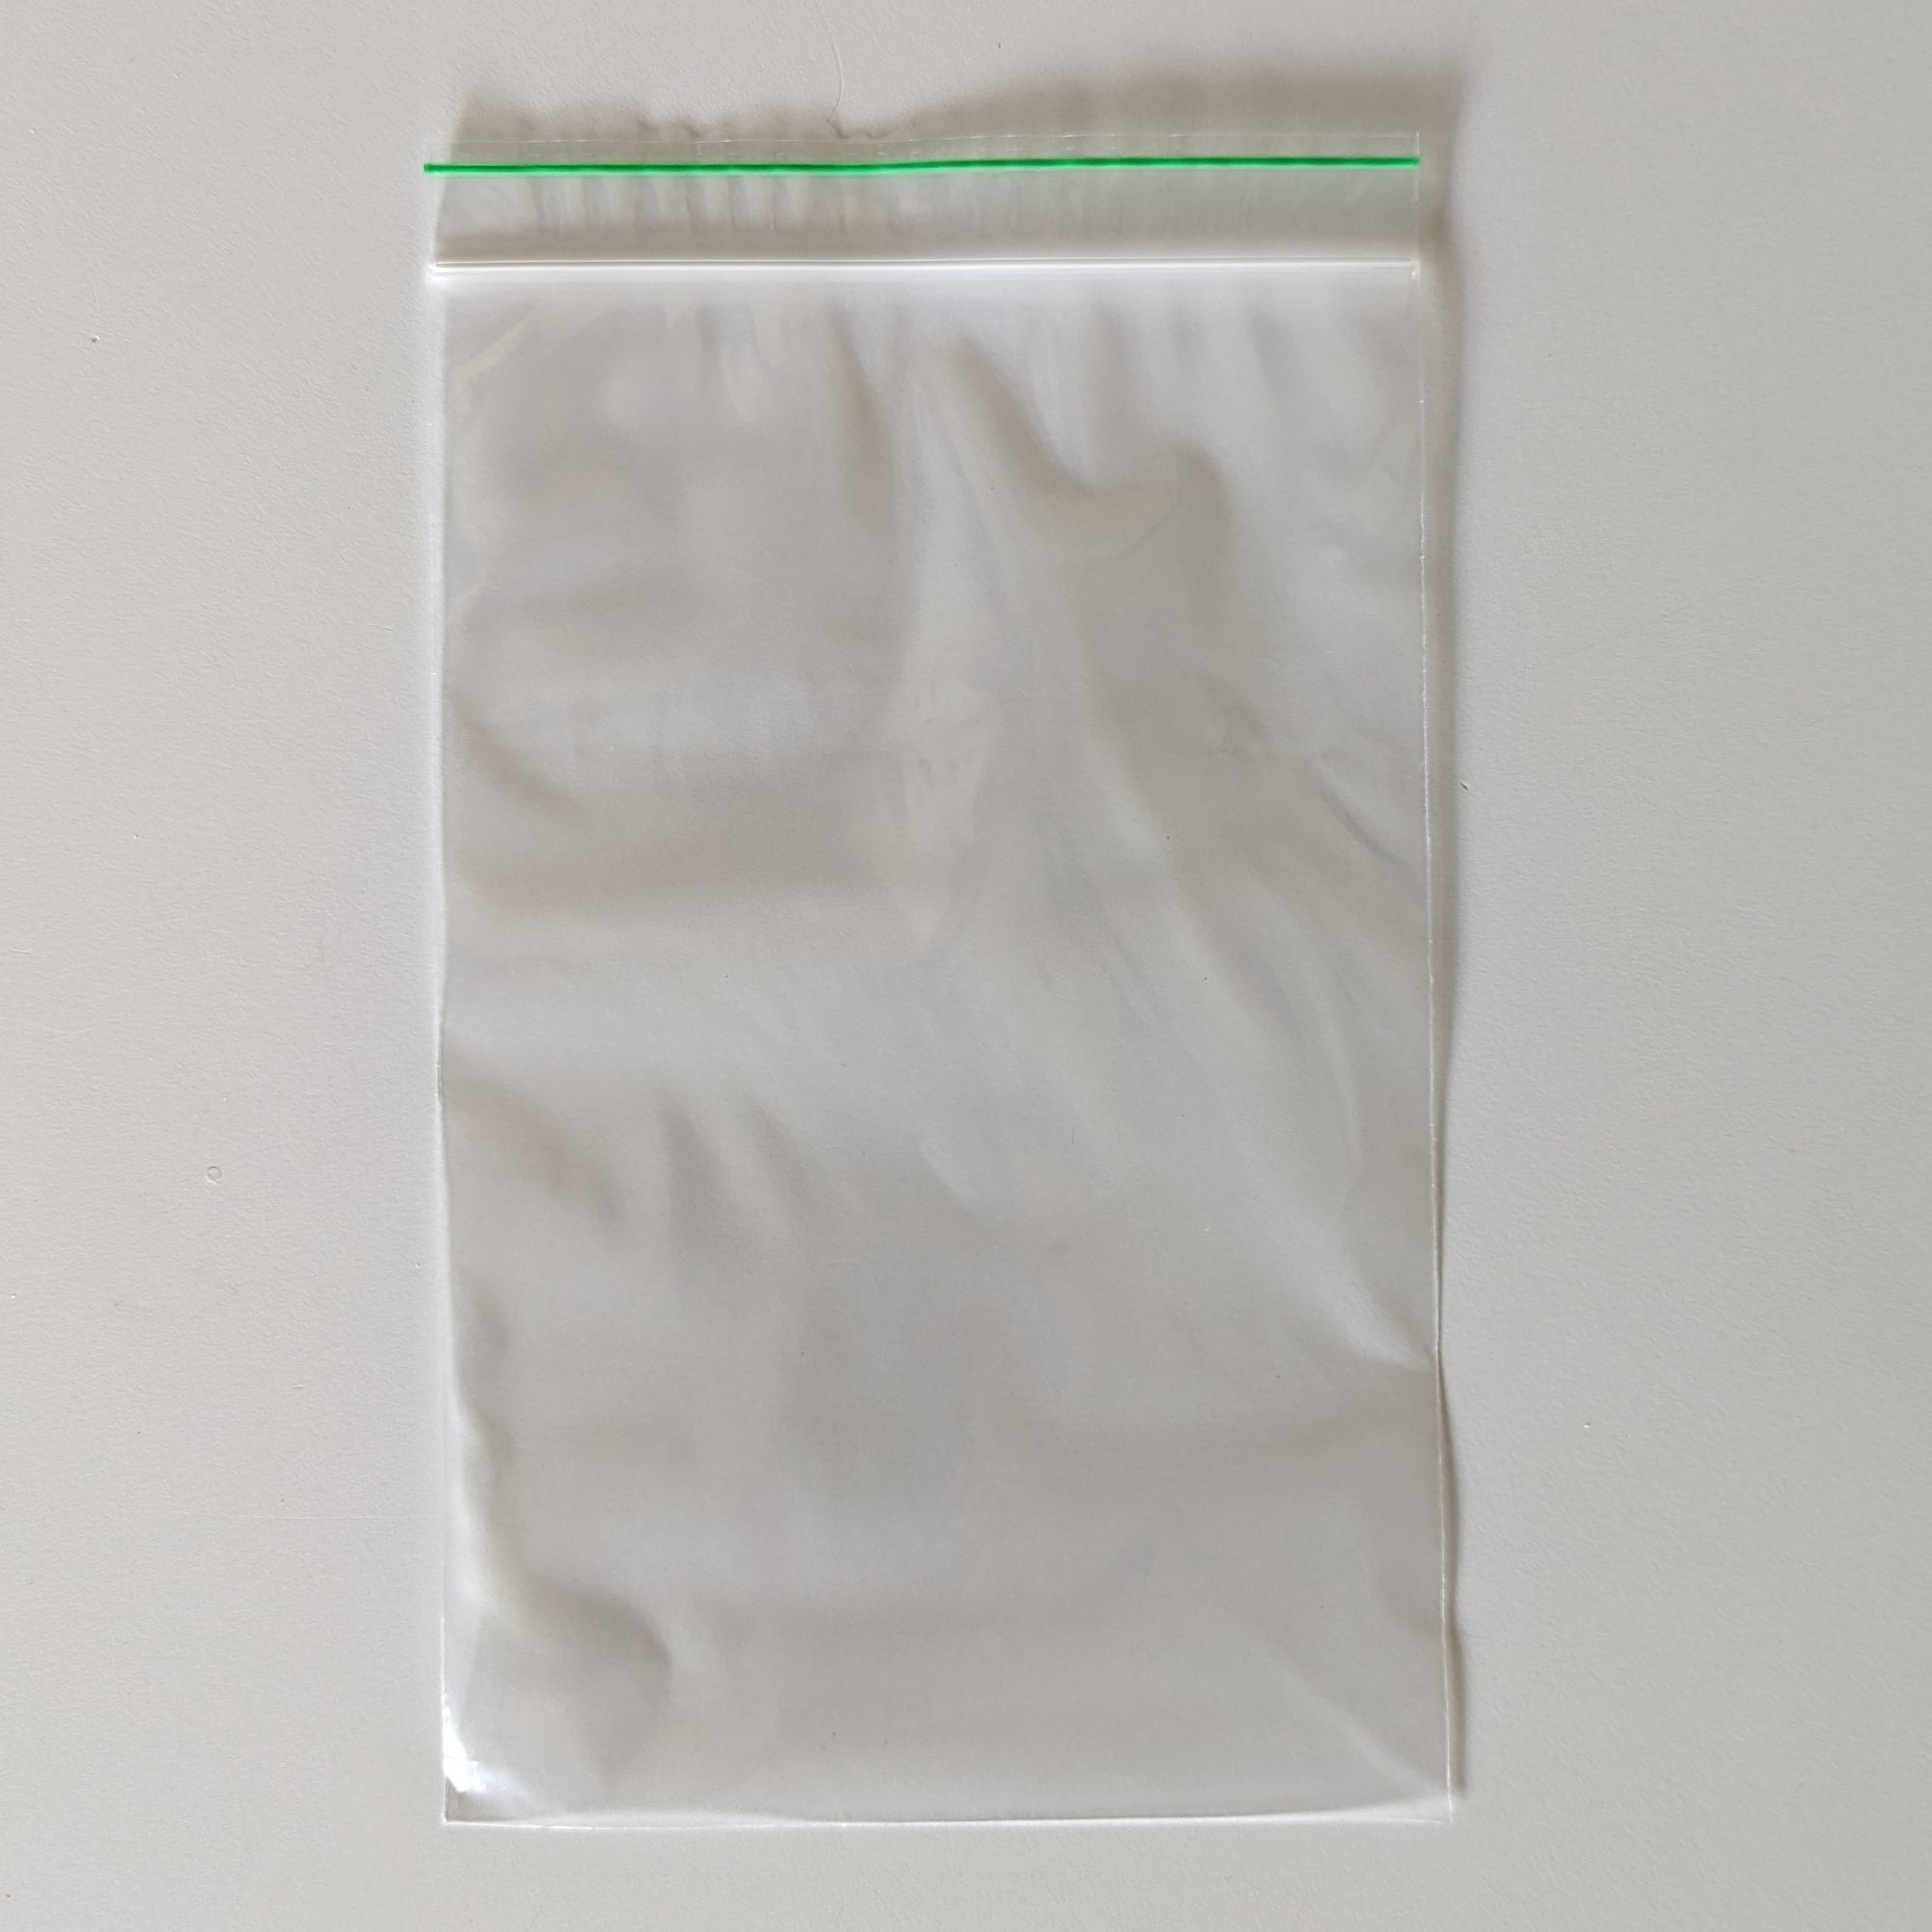 Quart/Sandwich Size Clear Landfill-Biodegradable Plastic Ziplock Bags 1